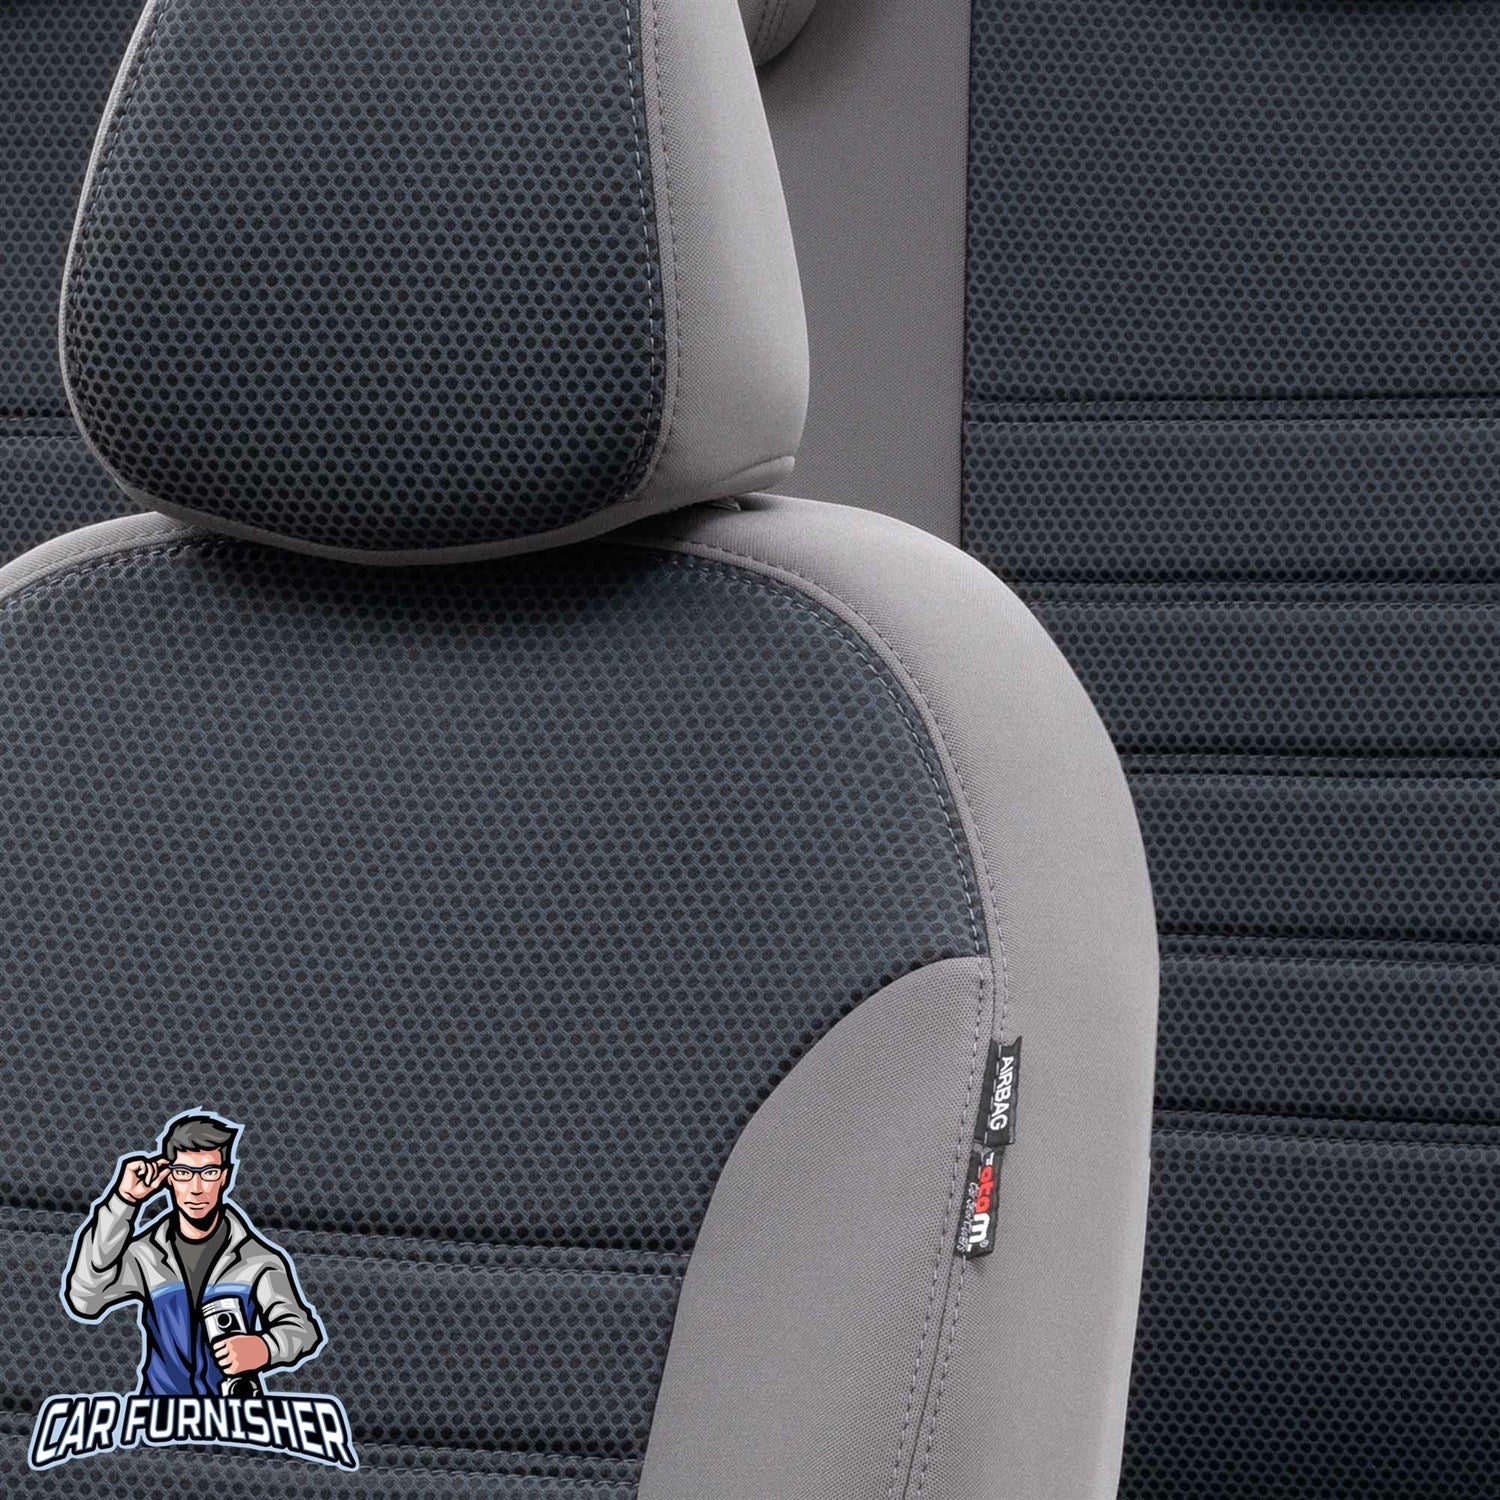 Peugeot Expert Seat Covers Original Jacquard Design Smoked Jacquard Fabric